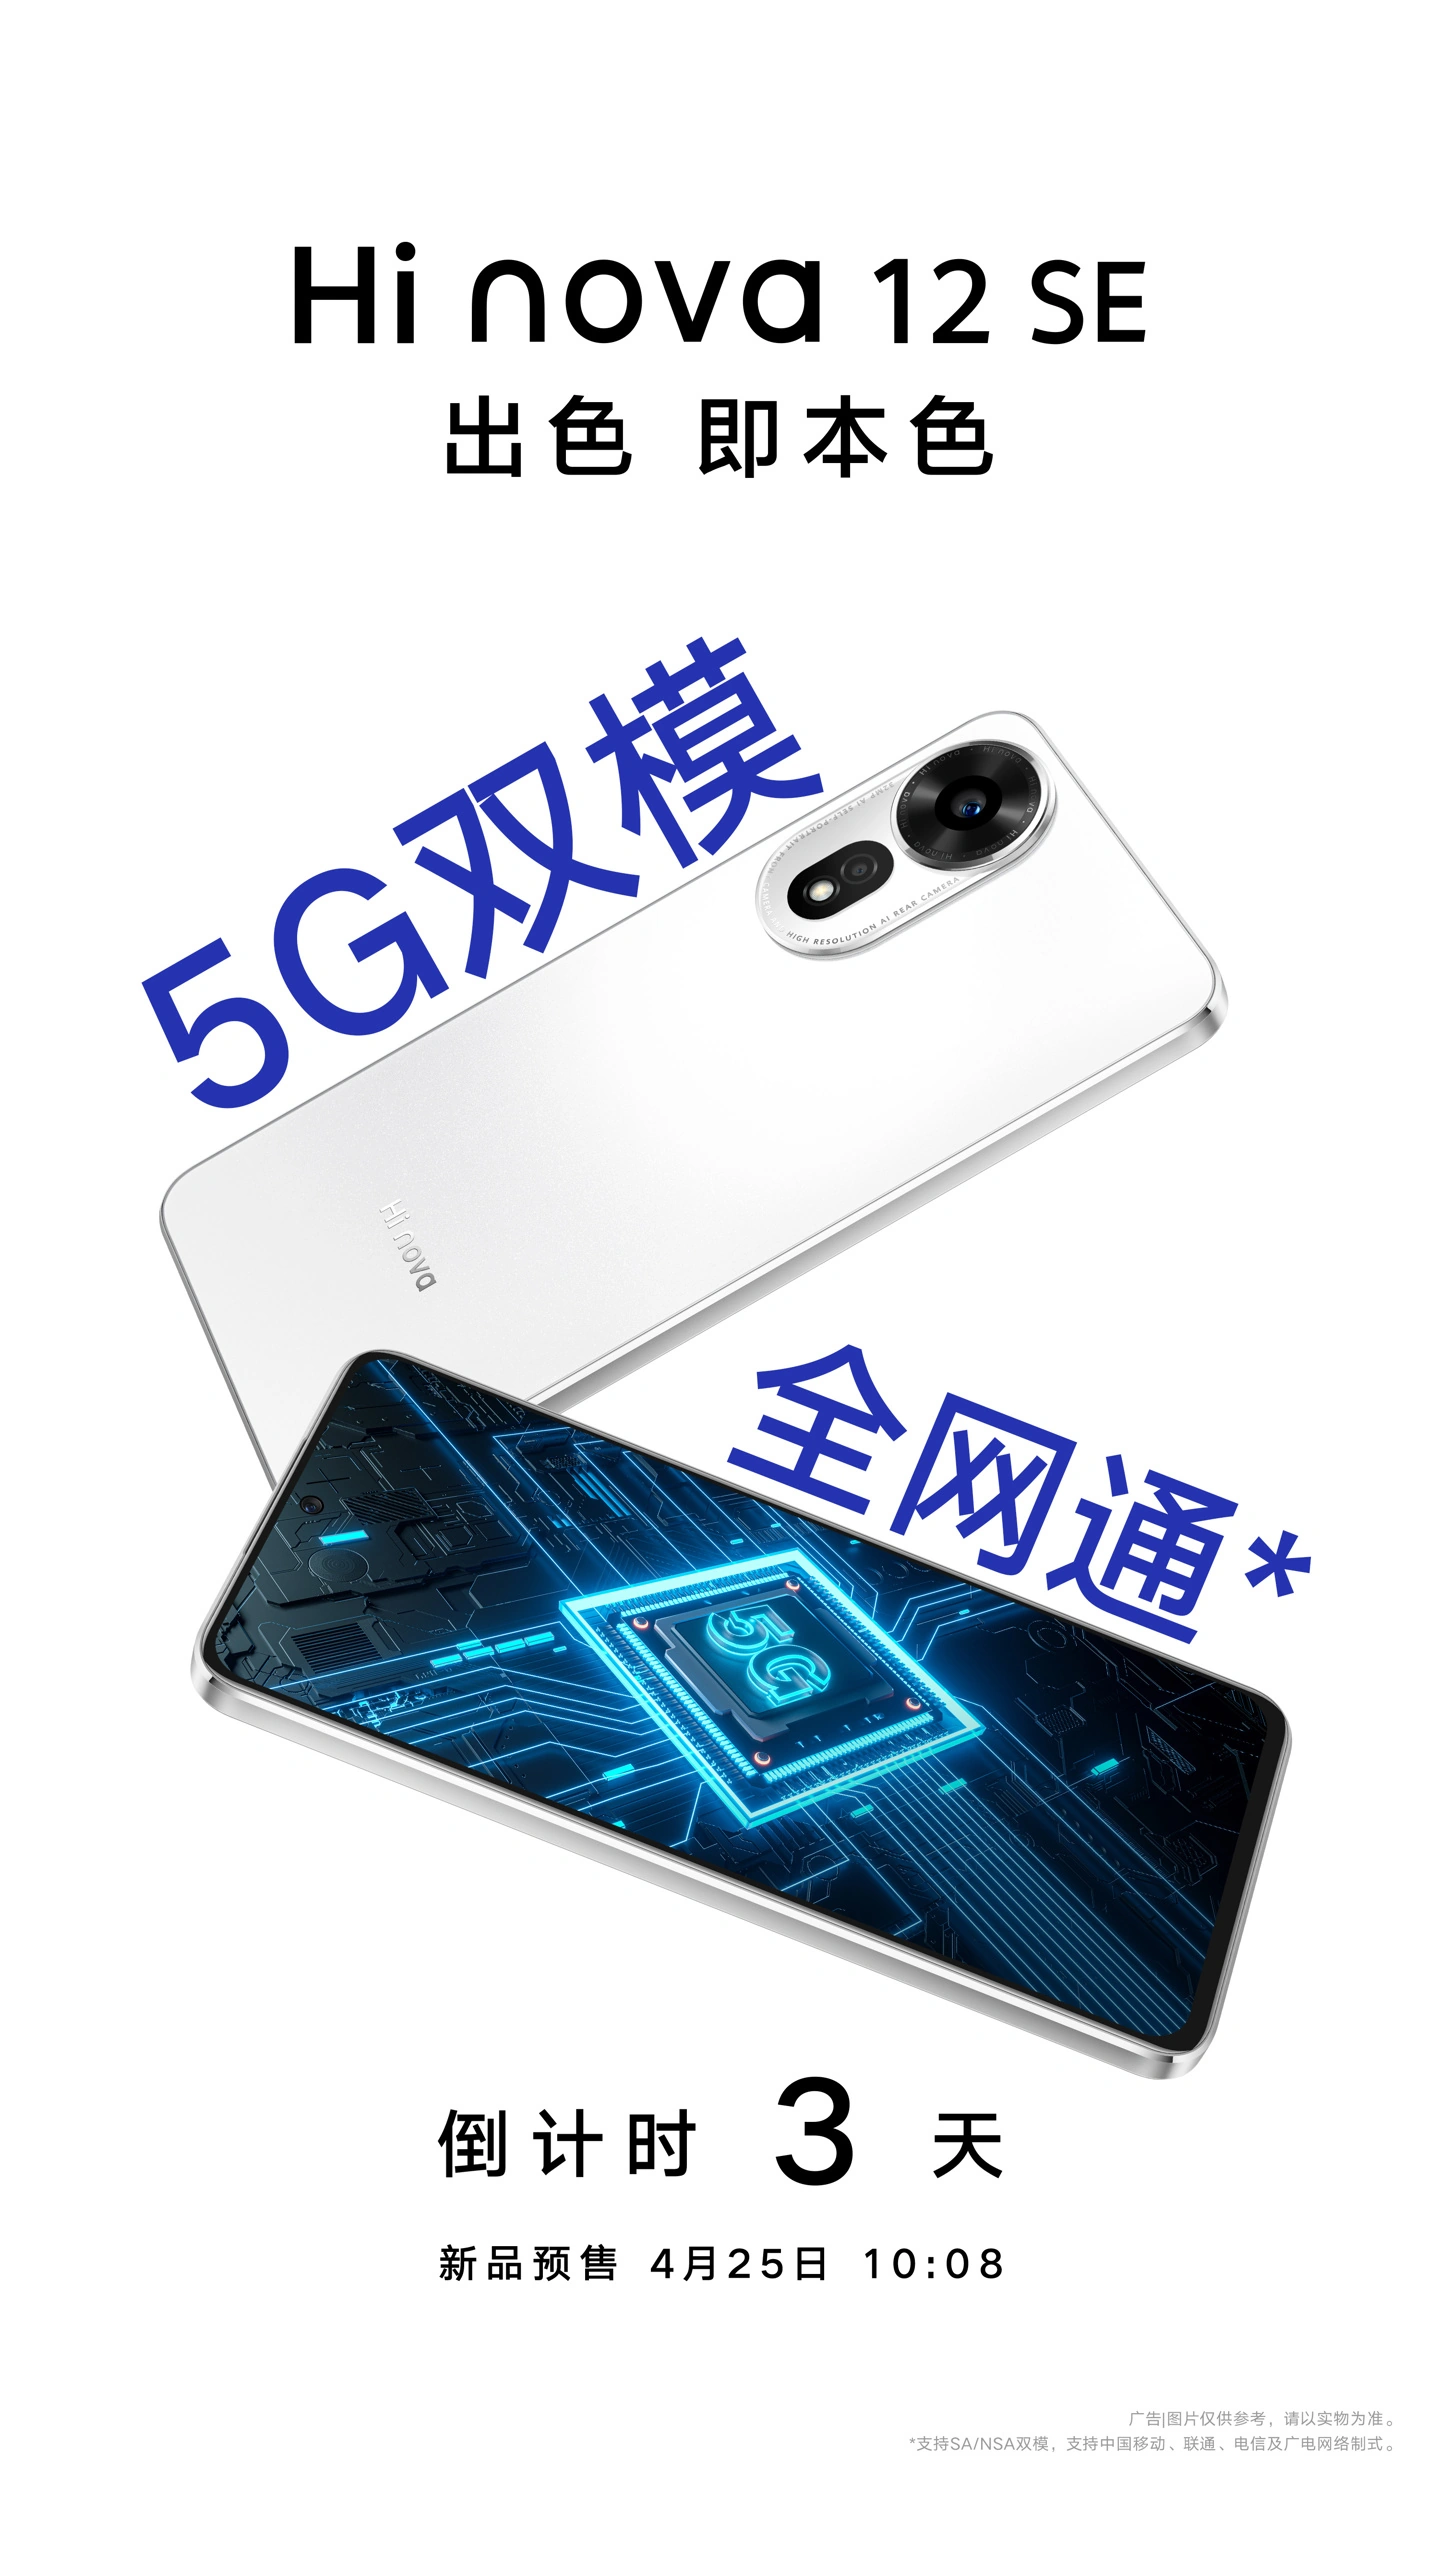  5G- ()  Huawei! Hi nova 12 SE   